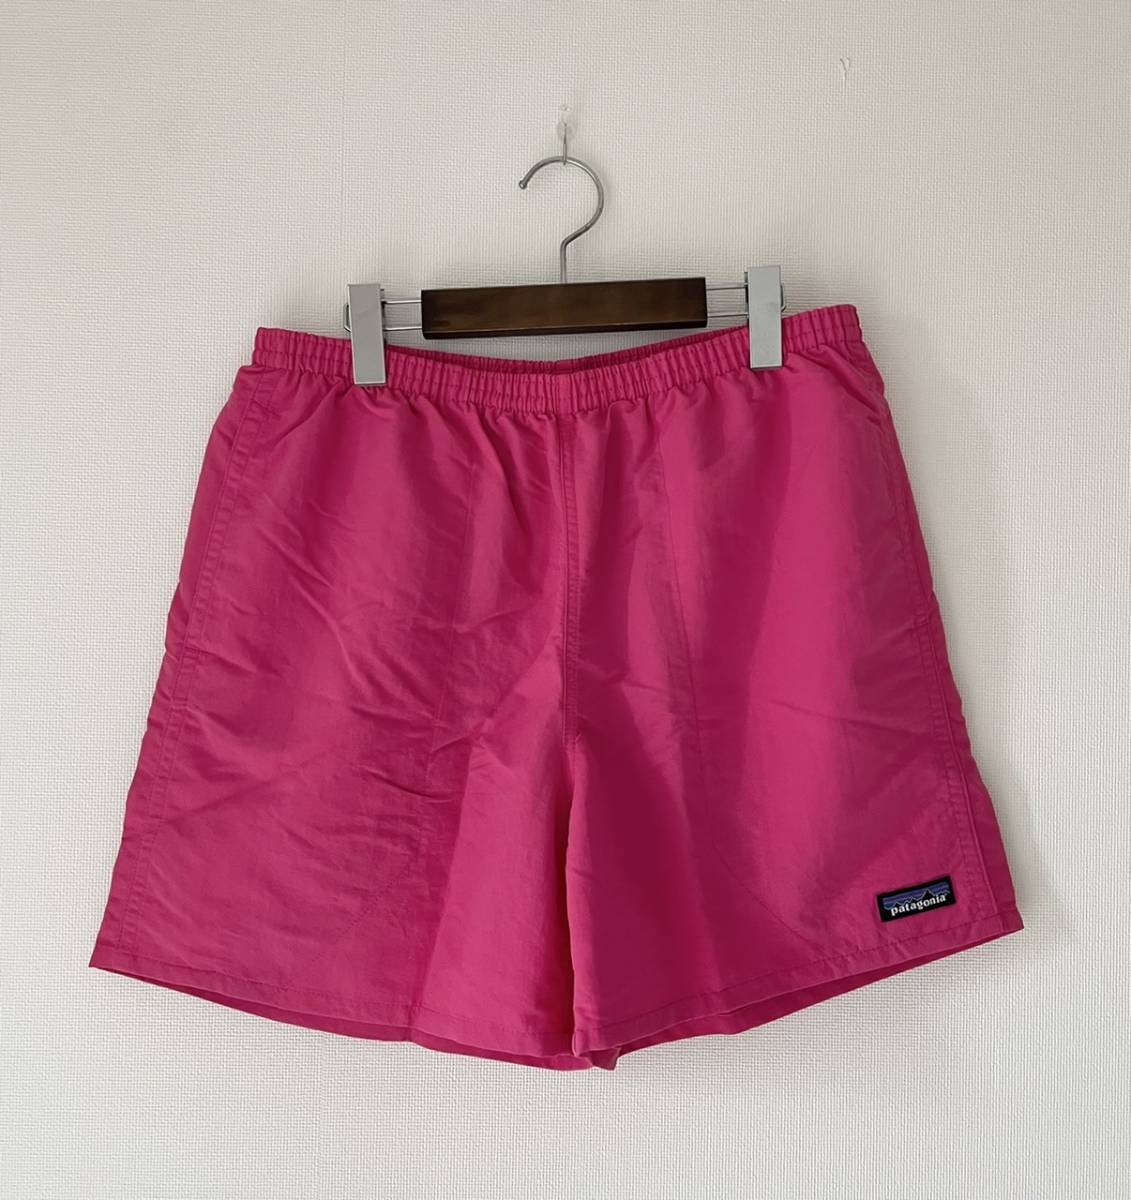 Patagonia パタゴニア バギーショーツ 5インチ ウルトラピンク Baggies shorts 5inch pink(ショート、ハーフ